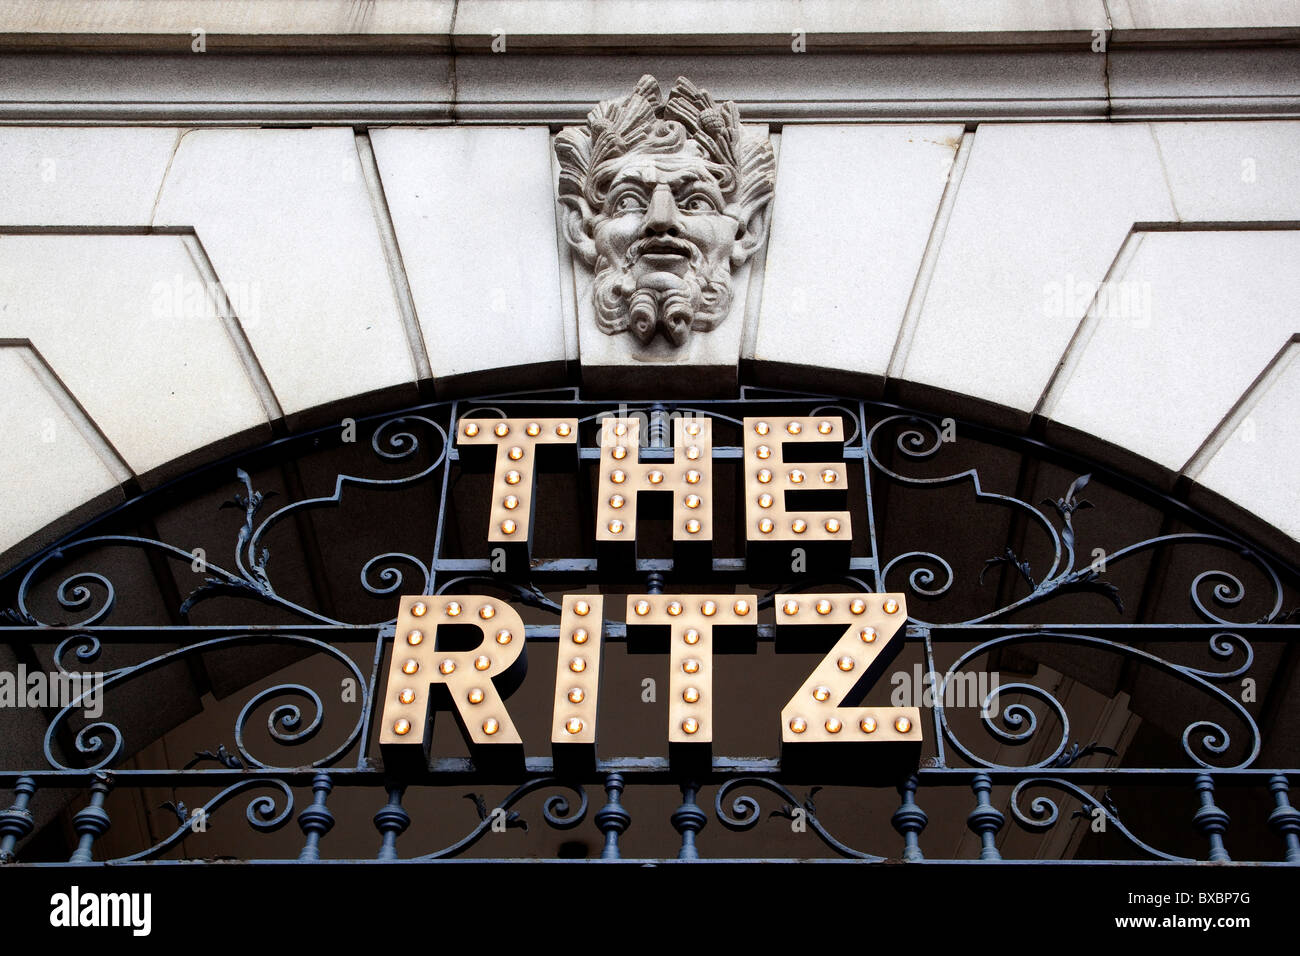 The Ritz Hotel in London, England, United Kingdom, Europe Stock Photo